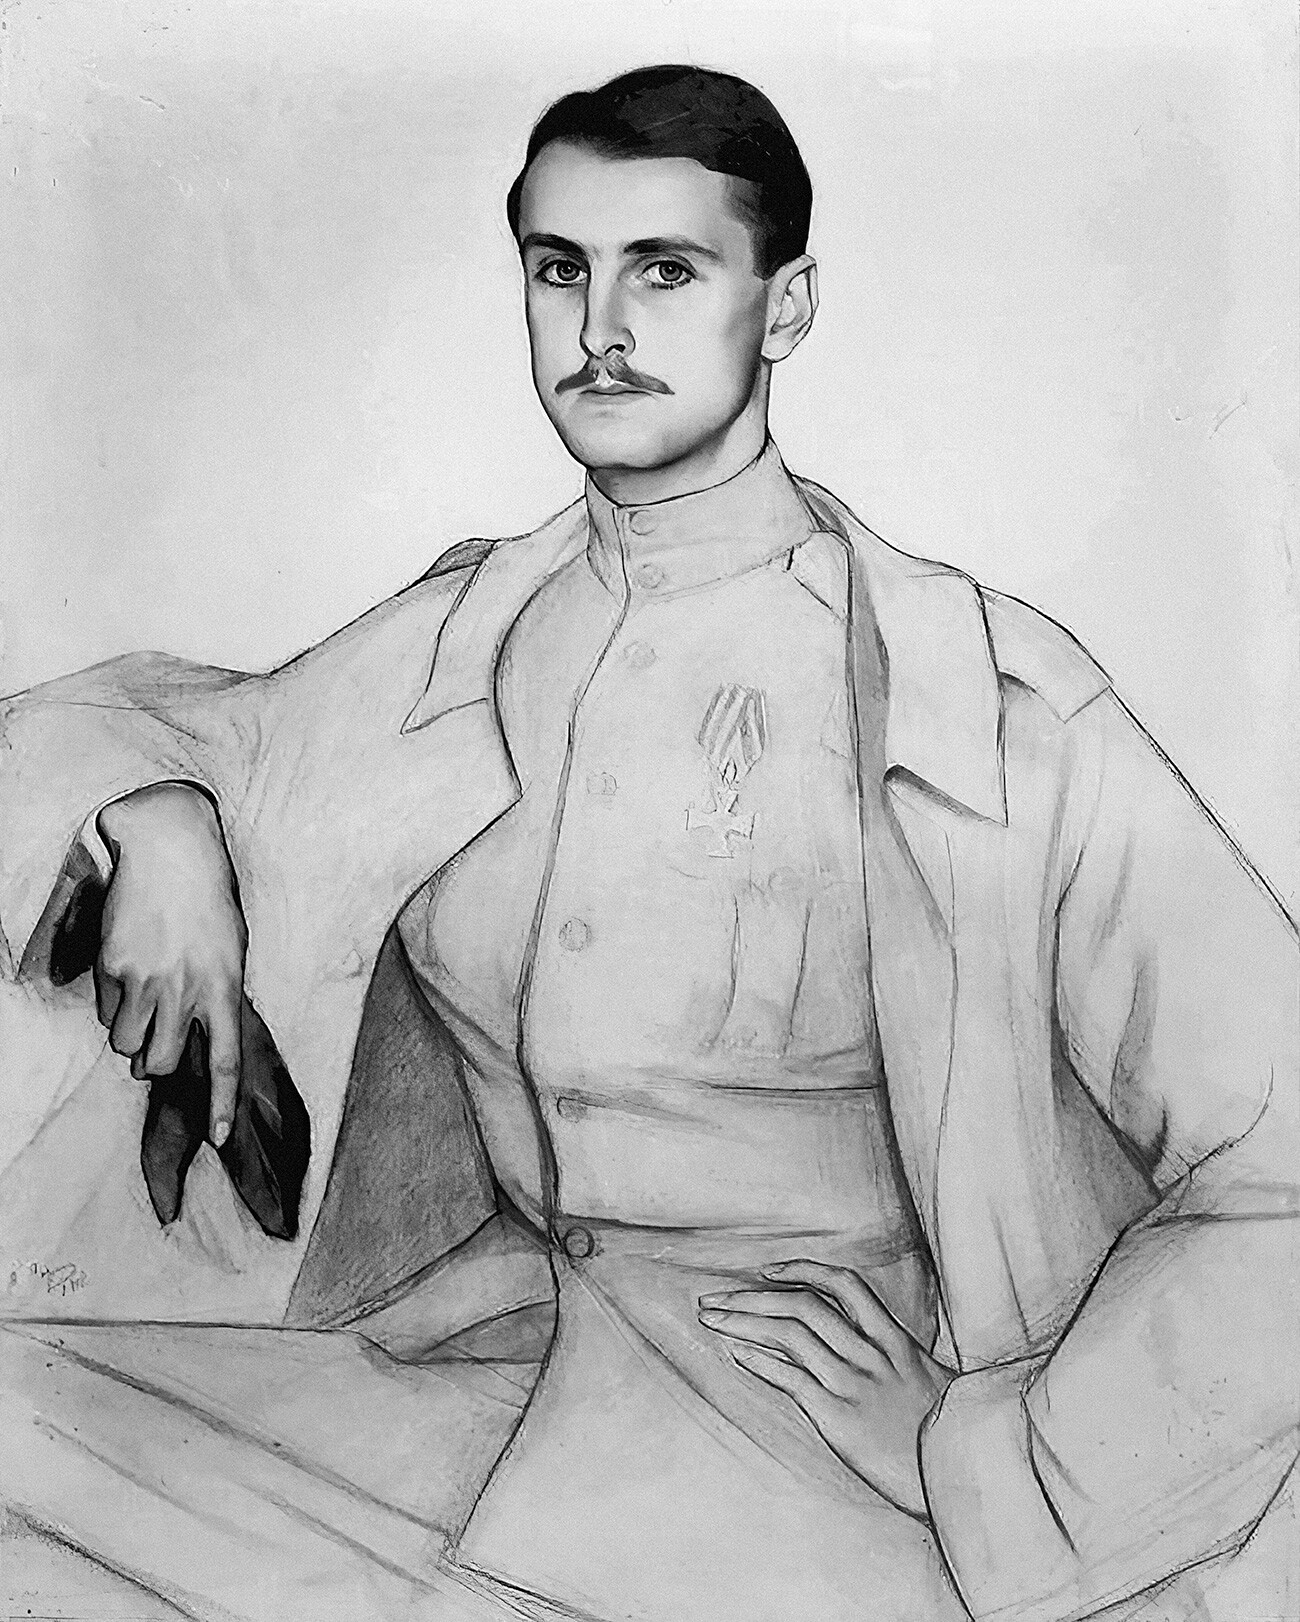 Ritratto del principe russo Sergej Platonovich Obolenskij (1890-1978) da giovane. Dopo la morte del padre, nel 1913, usò il cognome Obolenskij-Neledinskij-Meletzkij

